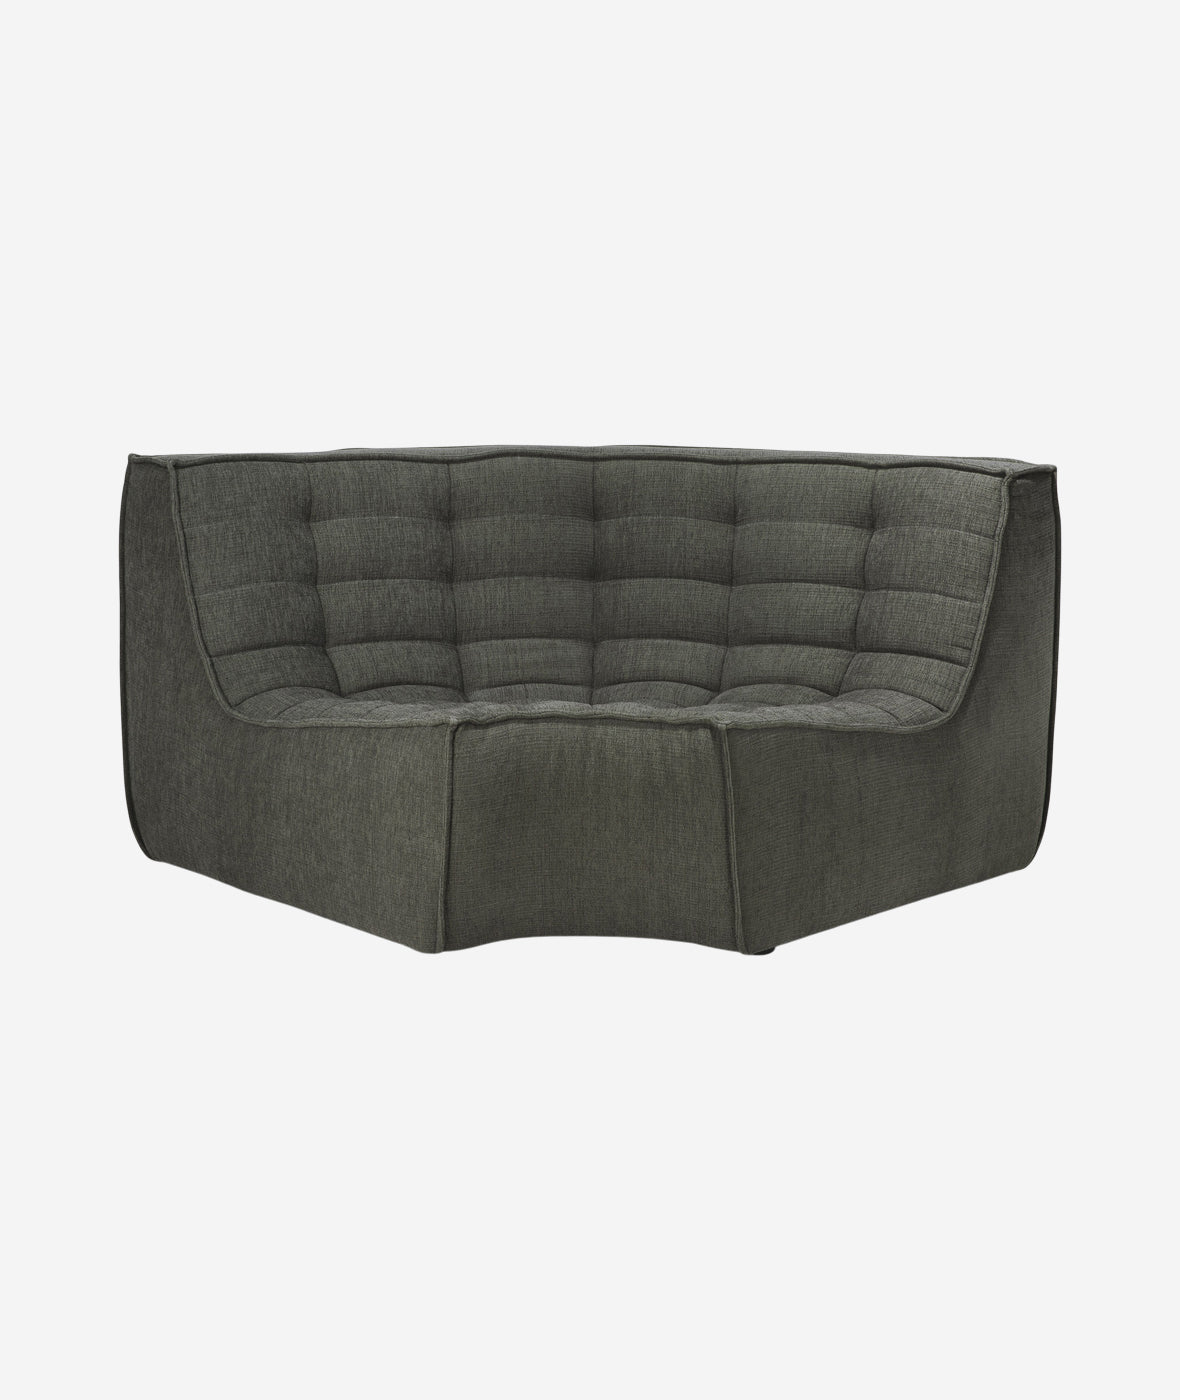 N701 Modular Round Corner Sofa - More Options